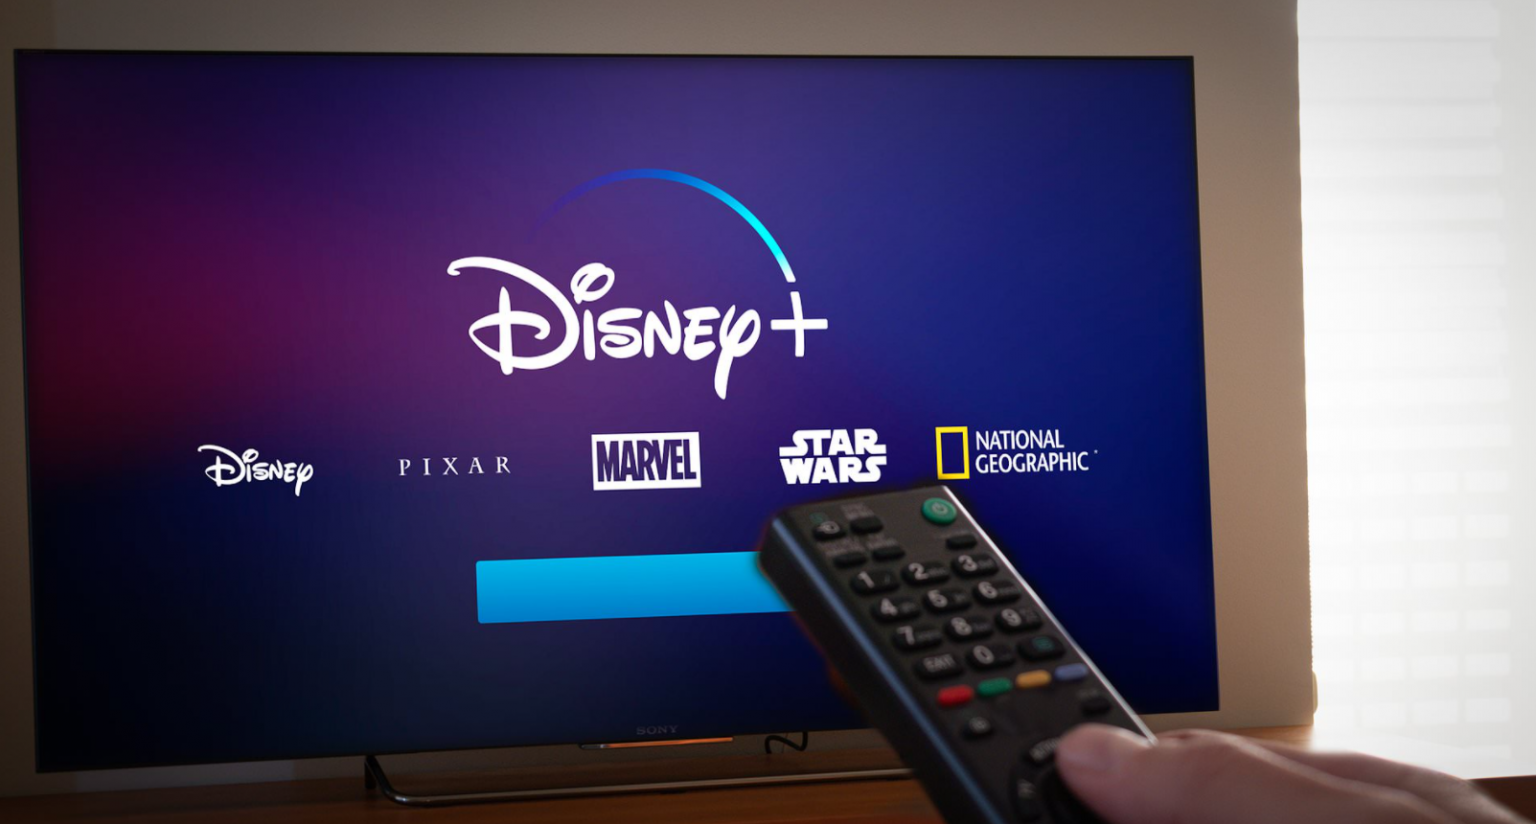 How to watch Disney Plus on LG Smart TV